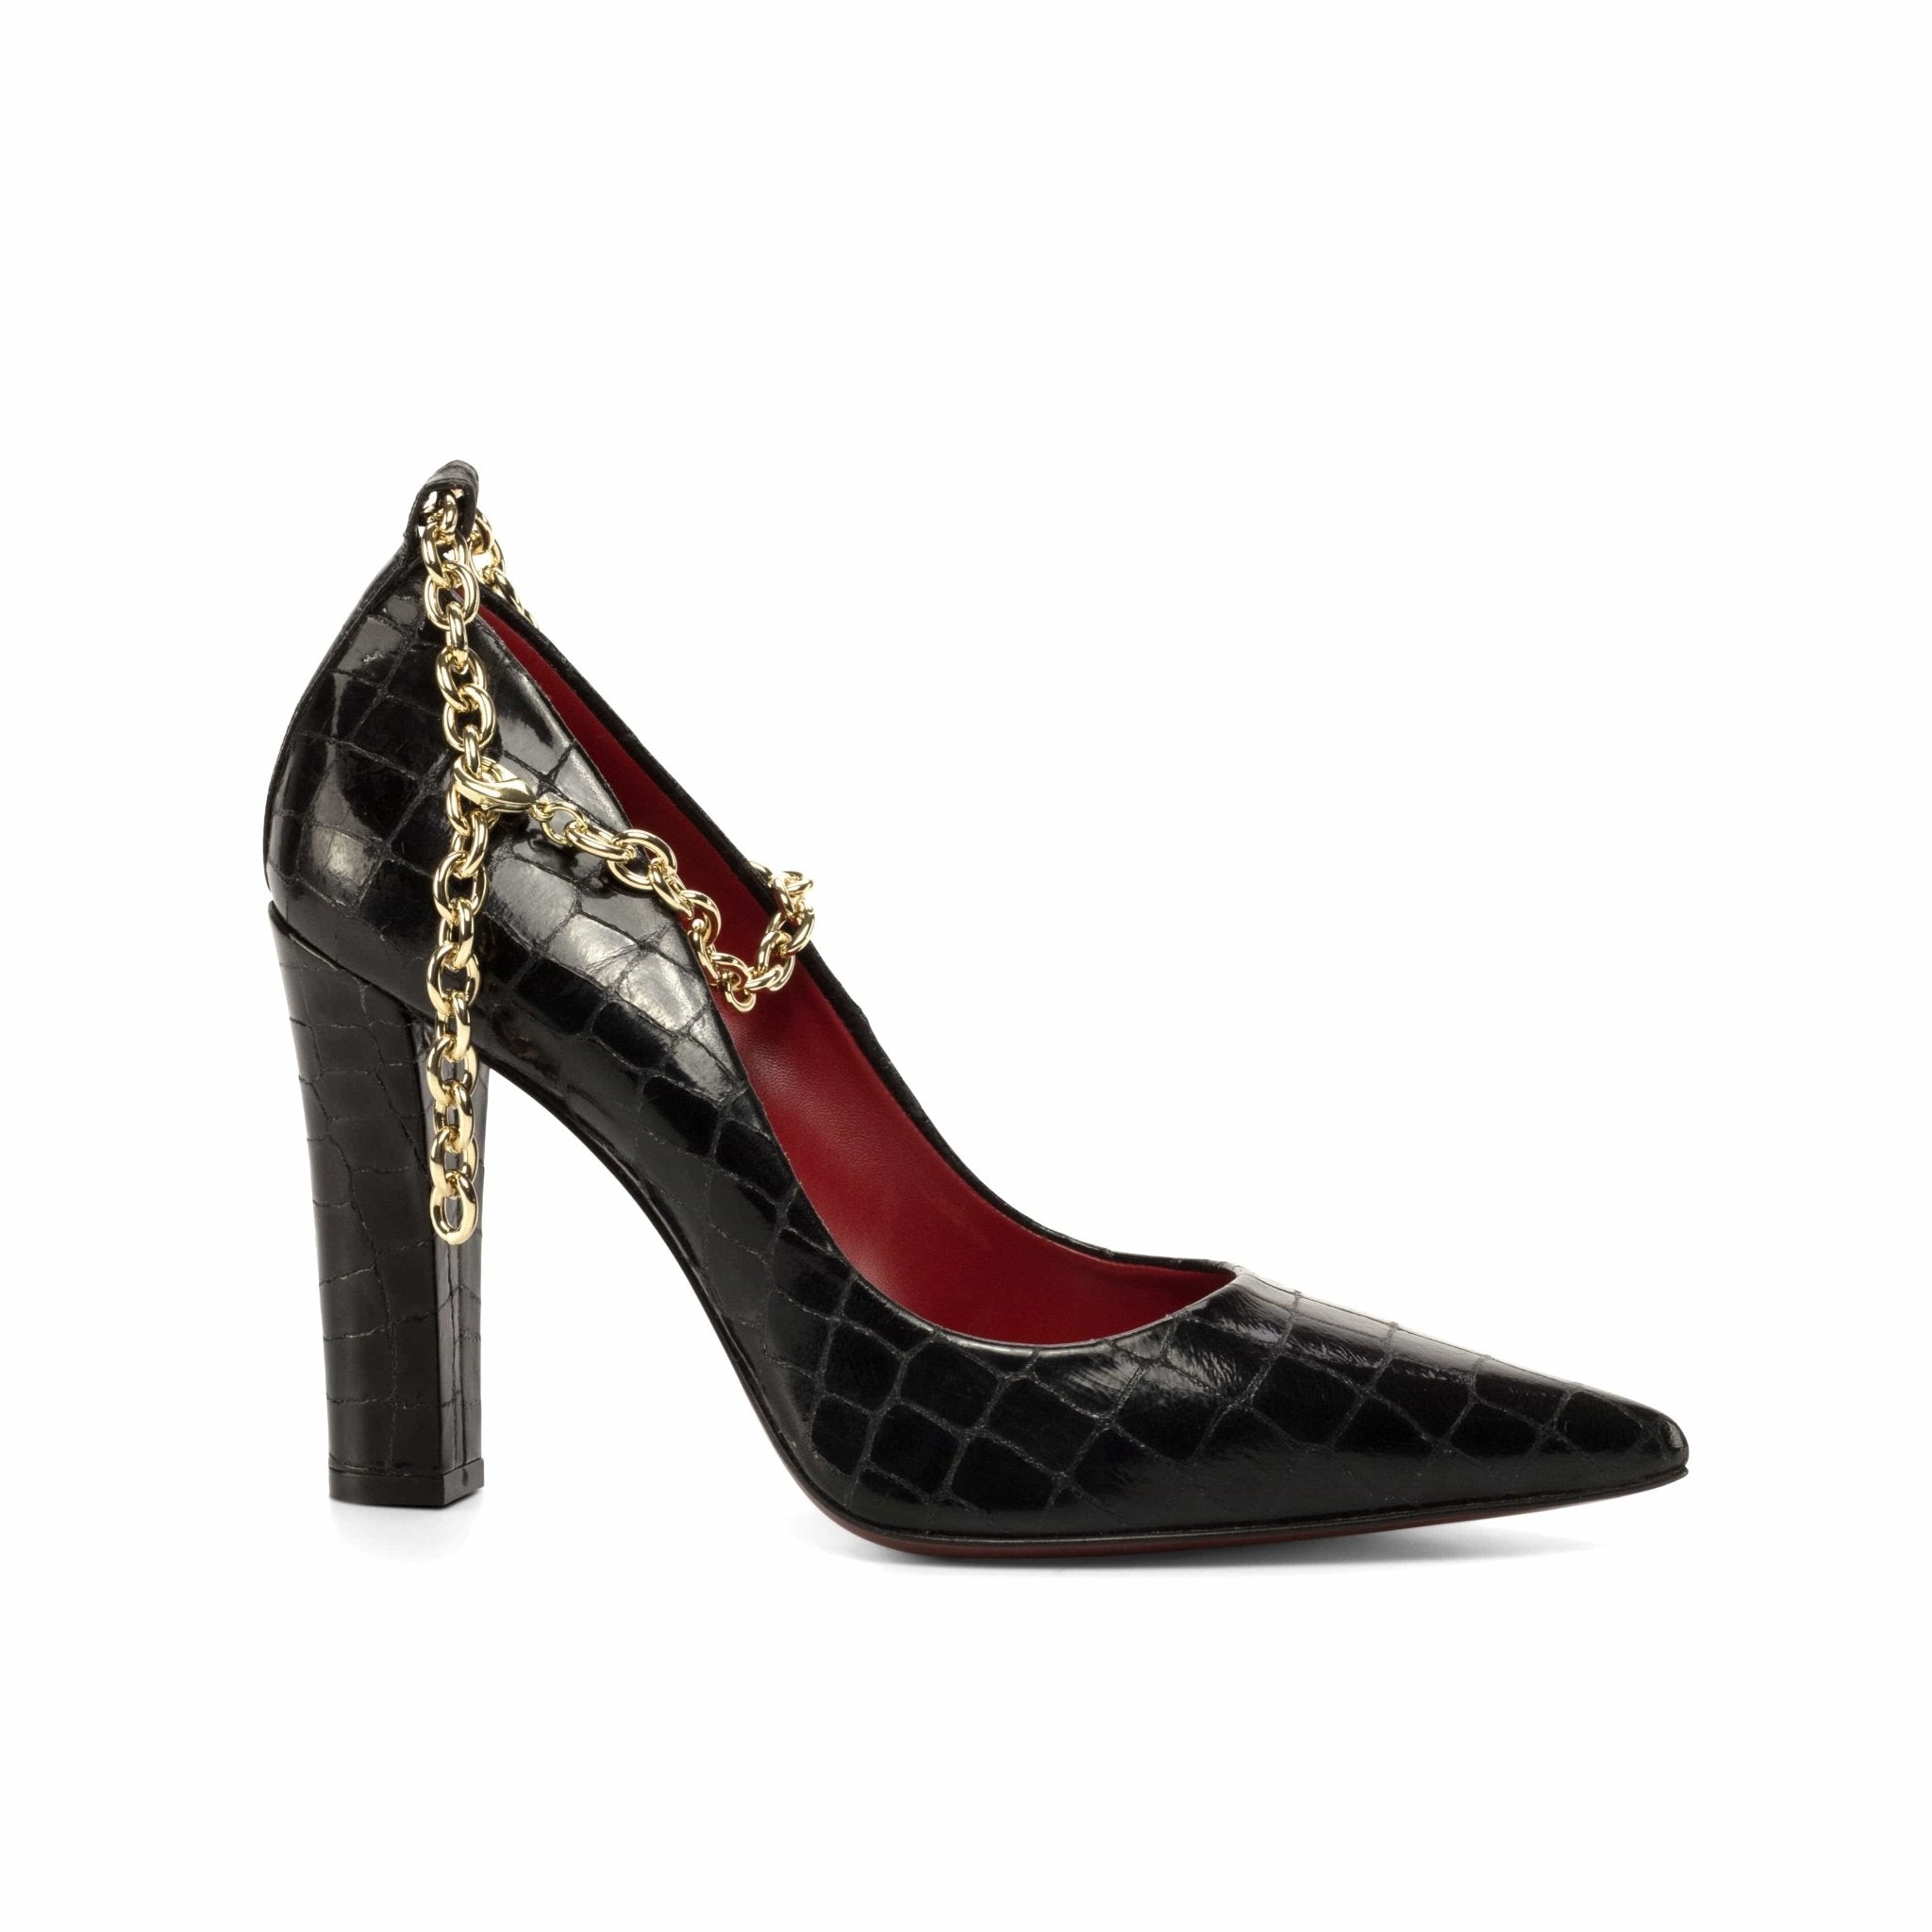 JOEupin Women Pumps, Pointed Toe High Heel 4 inch/10cm Party Stiletto Heels  Shoes black Size: 4: Amazon.co.uk: Fashion